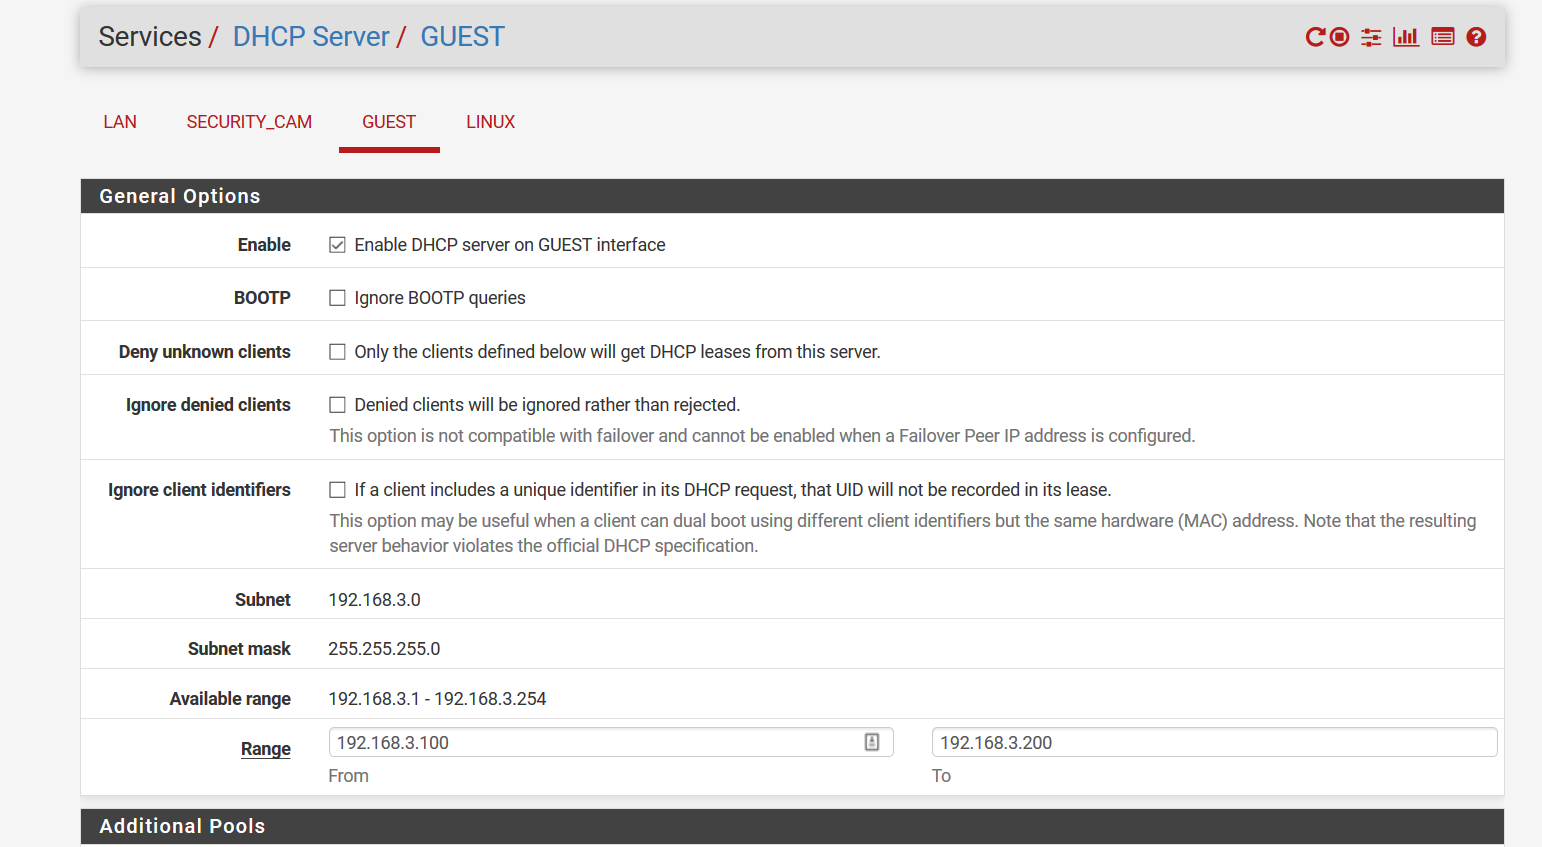 Screenshot_2019-03-24 Services DHCP Server GUEST1 - pfSense localdomain.png